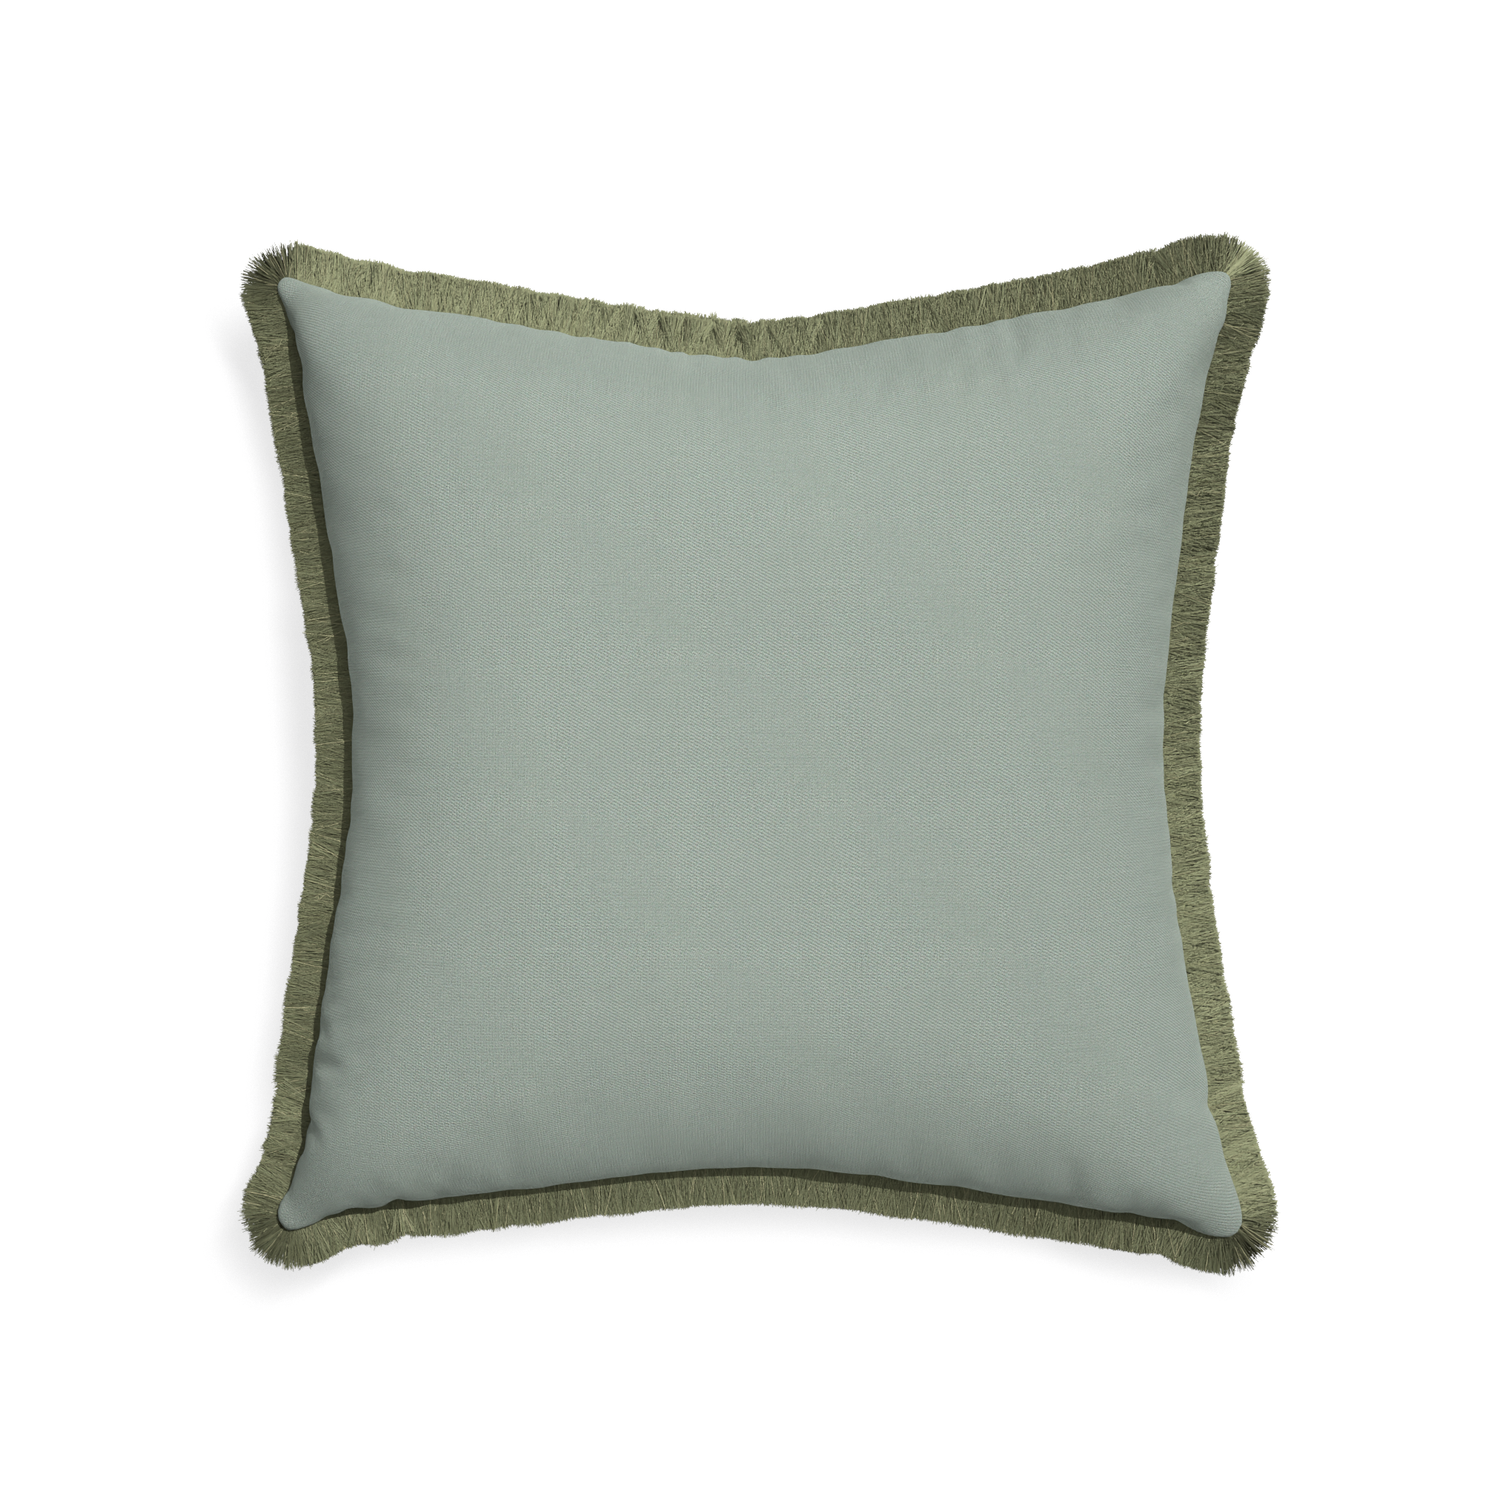 22-square sage custom pillow with sage fringe on white background